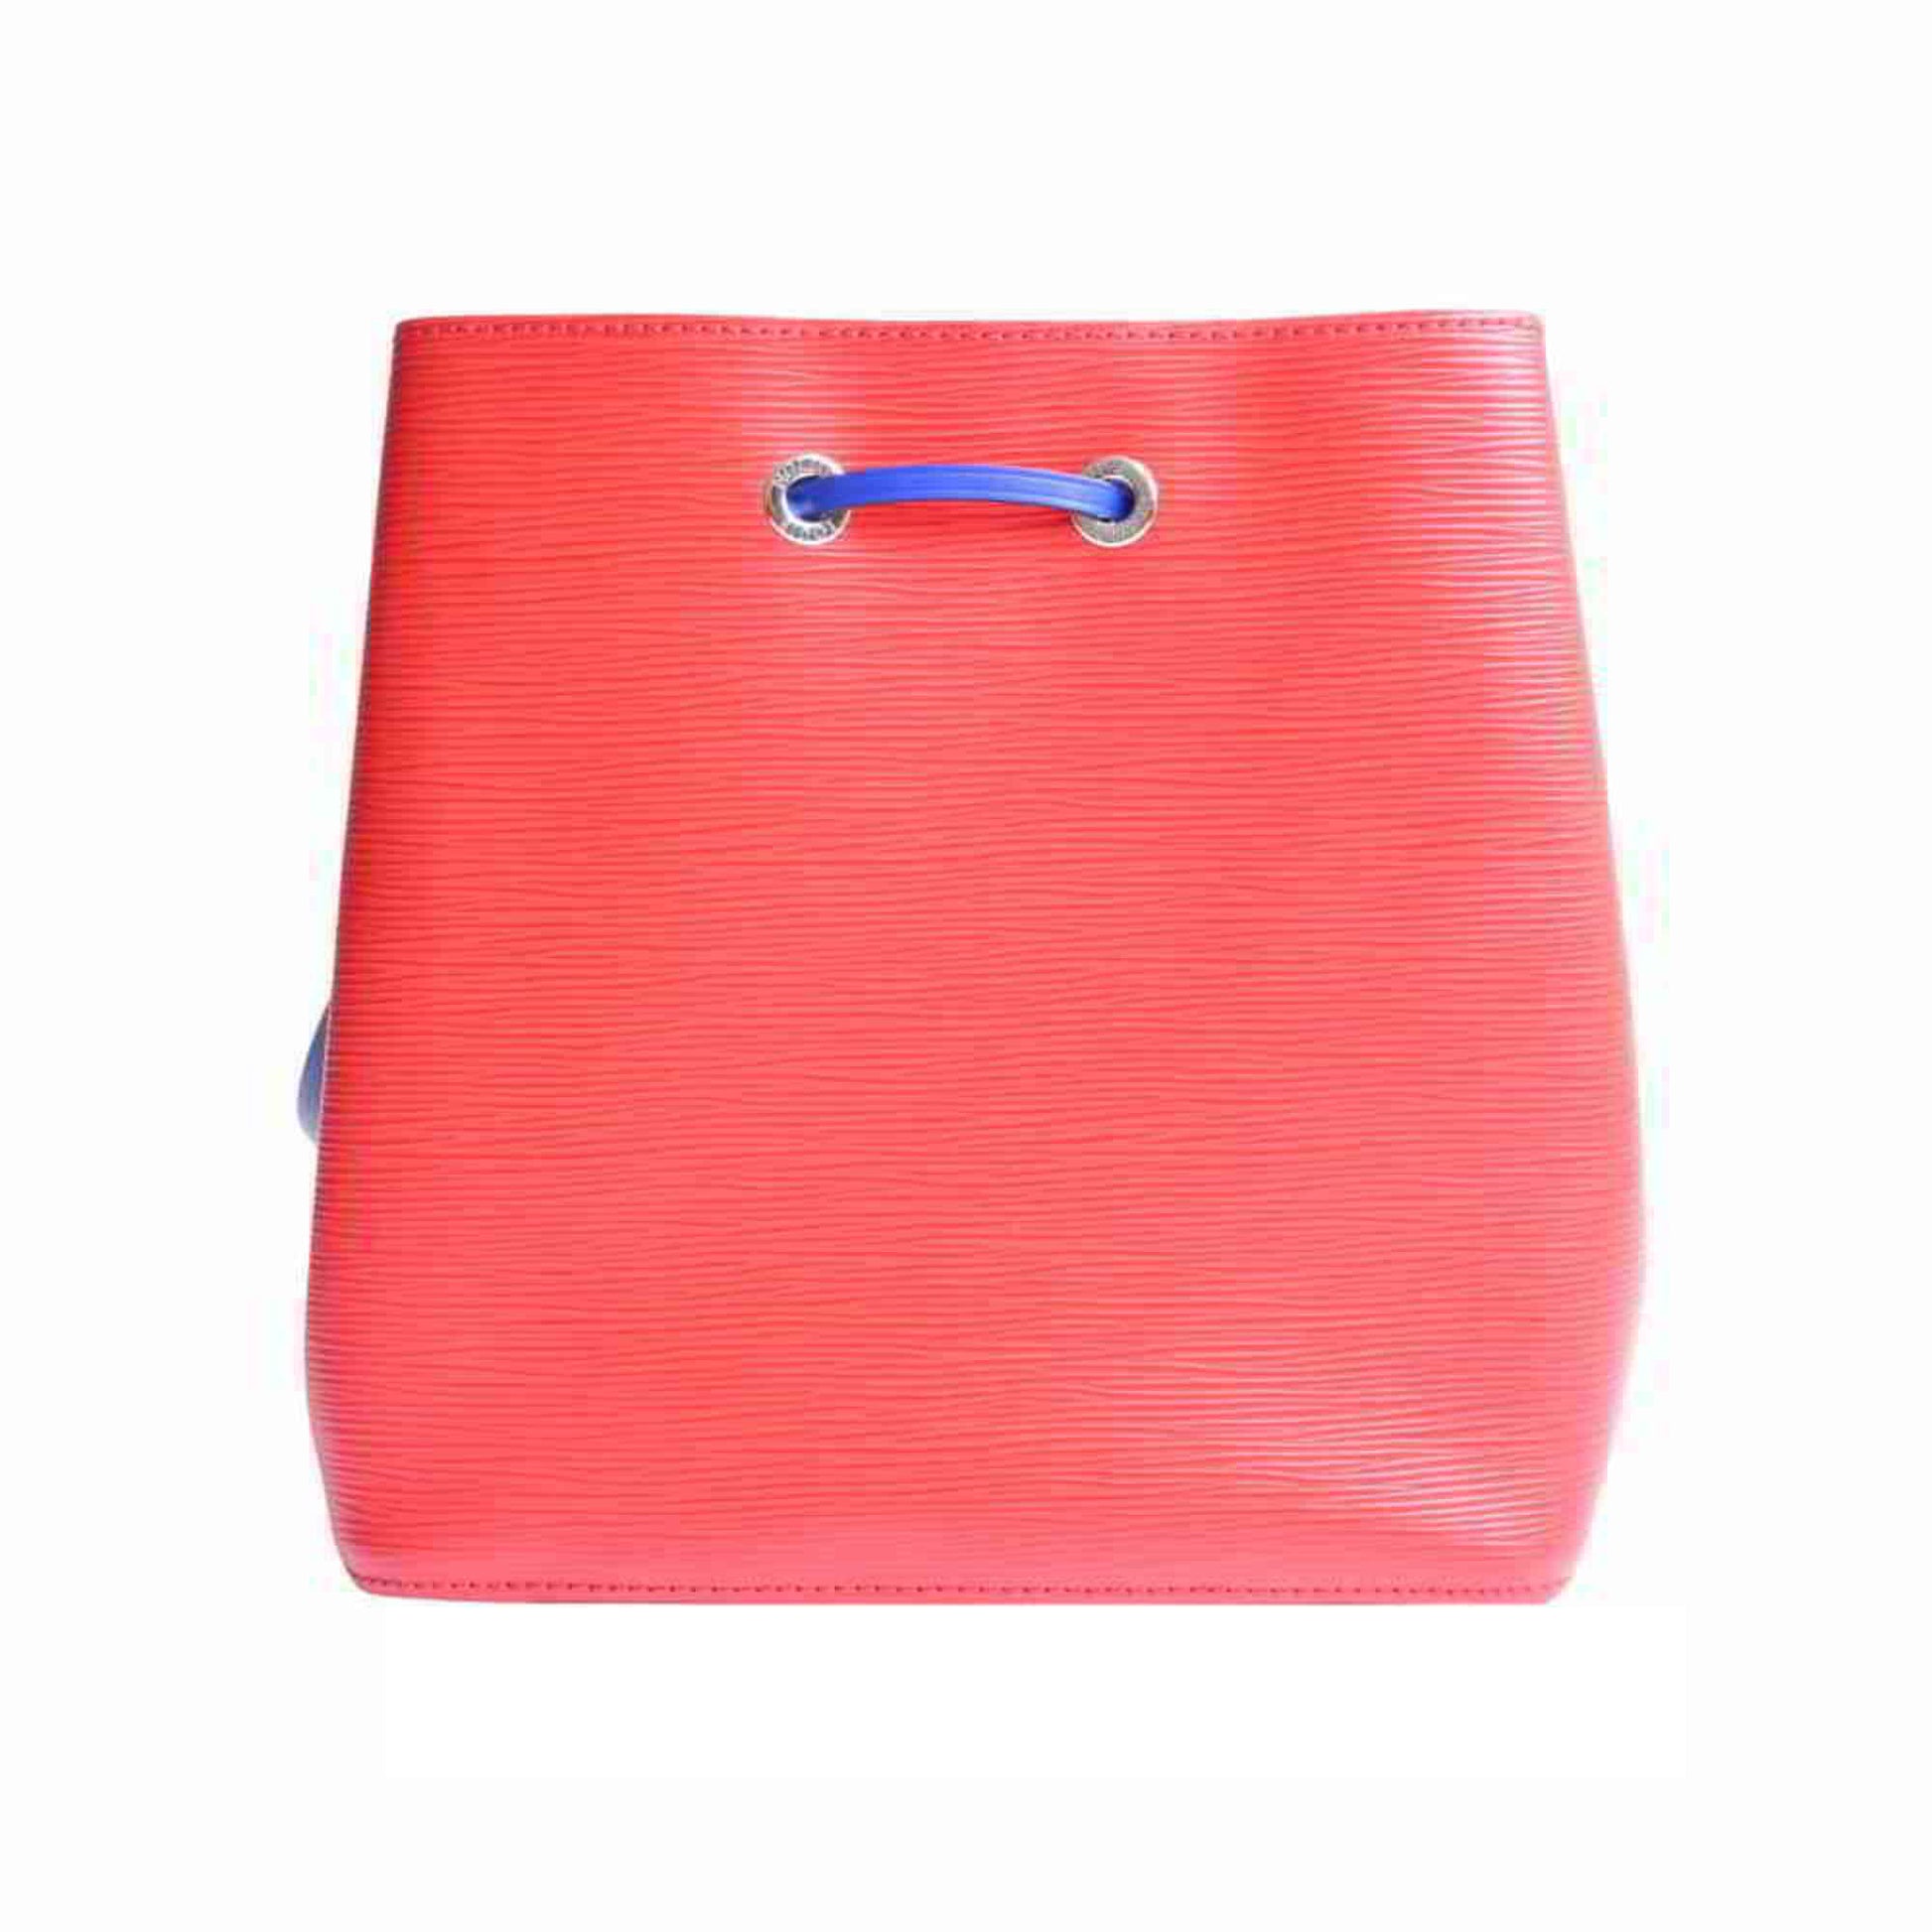 LOUIS VUITTON M55394 2WAYShoulder Neonoe Handbag White / black / red Epi  L